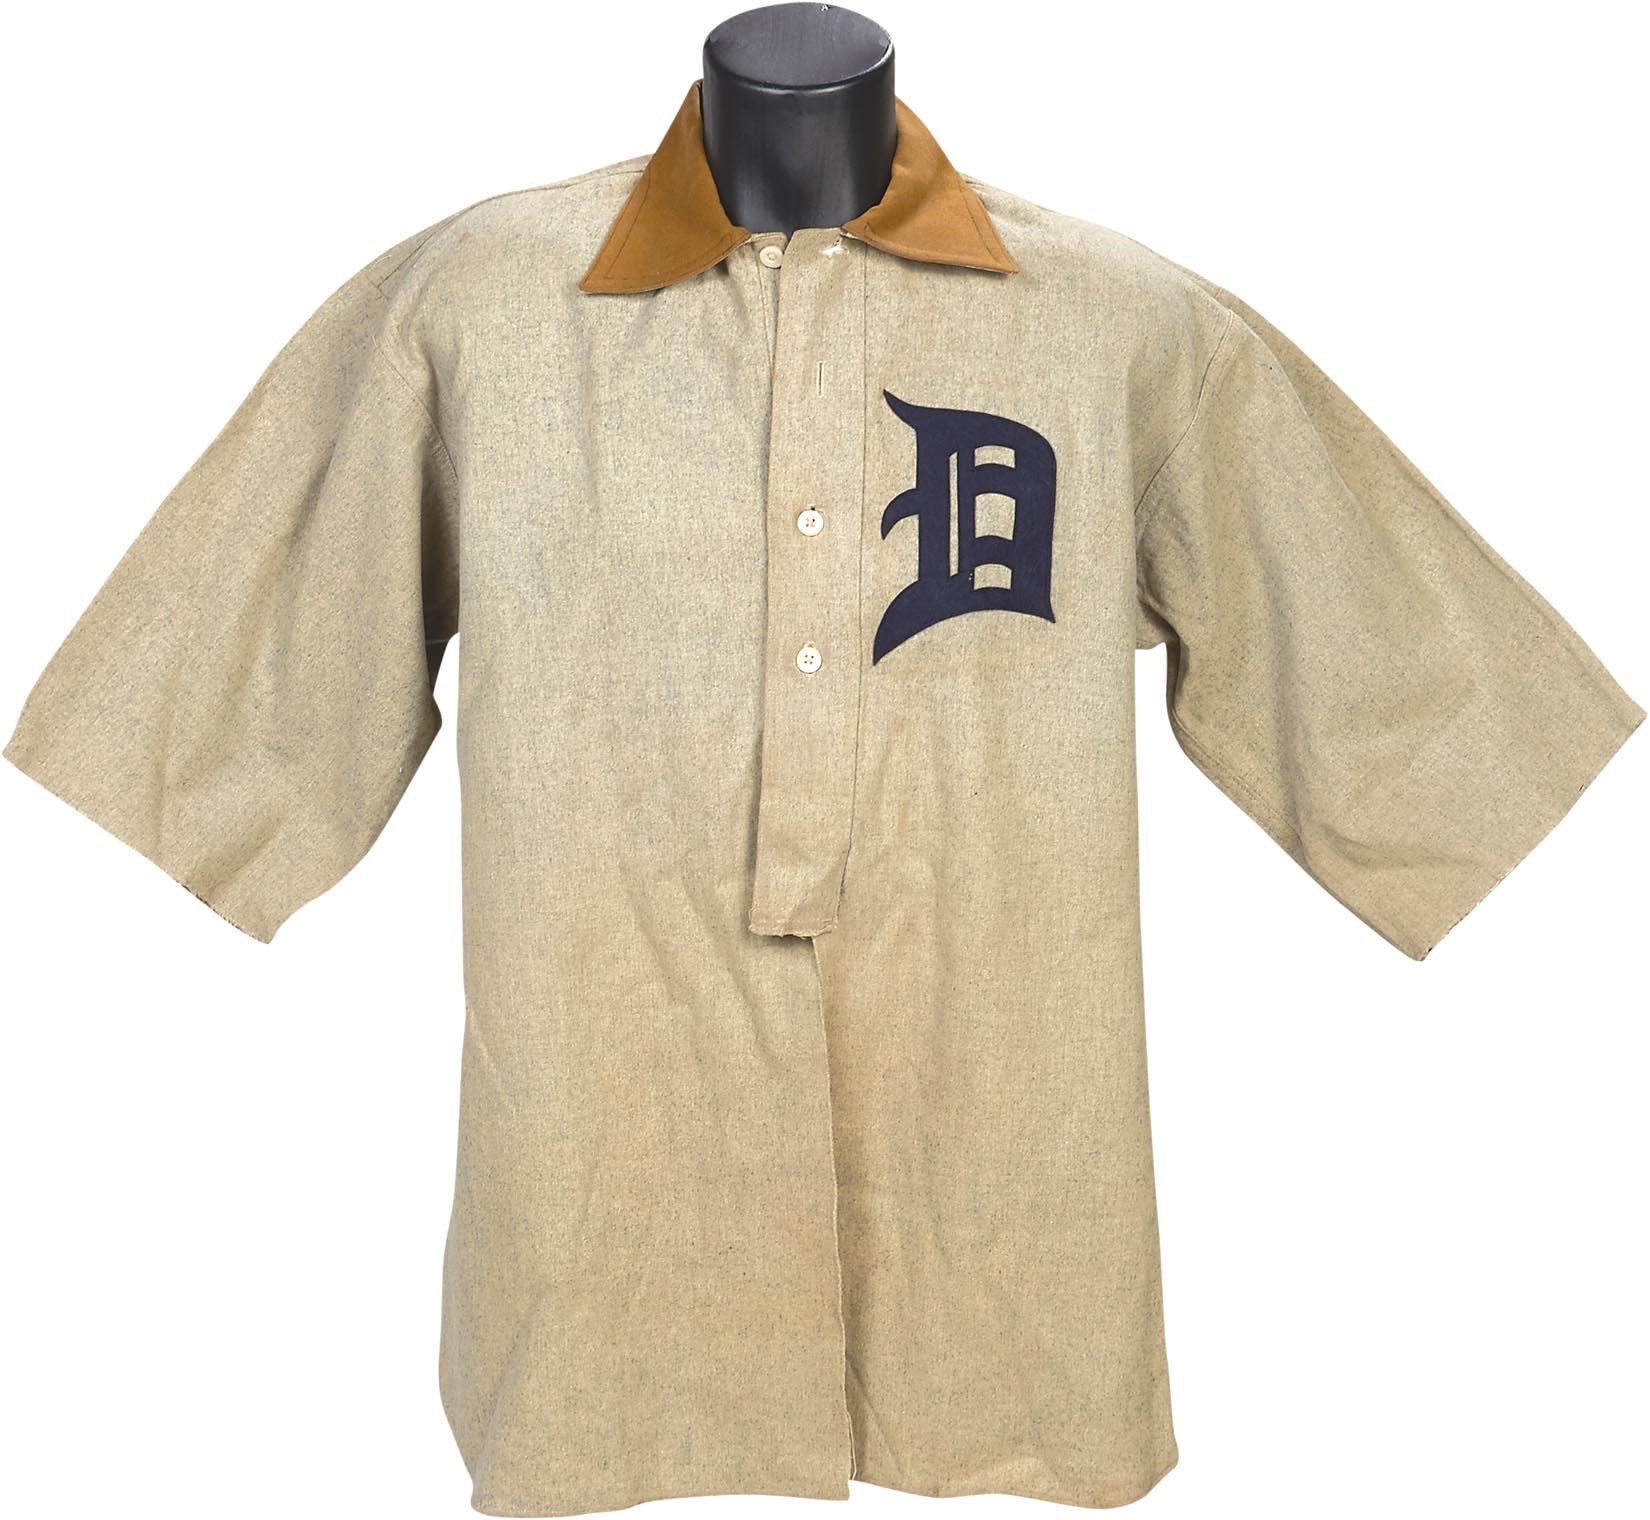 - Circa 1907 Bobby Lowe Detroit Tigers Game Worn Jersey